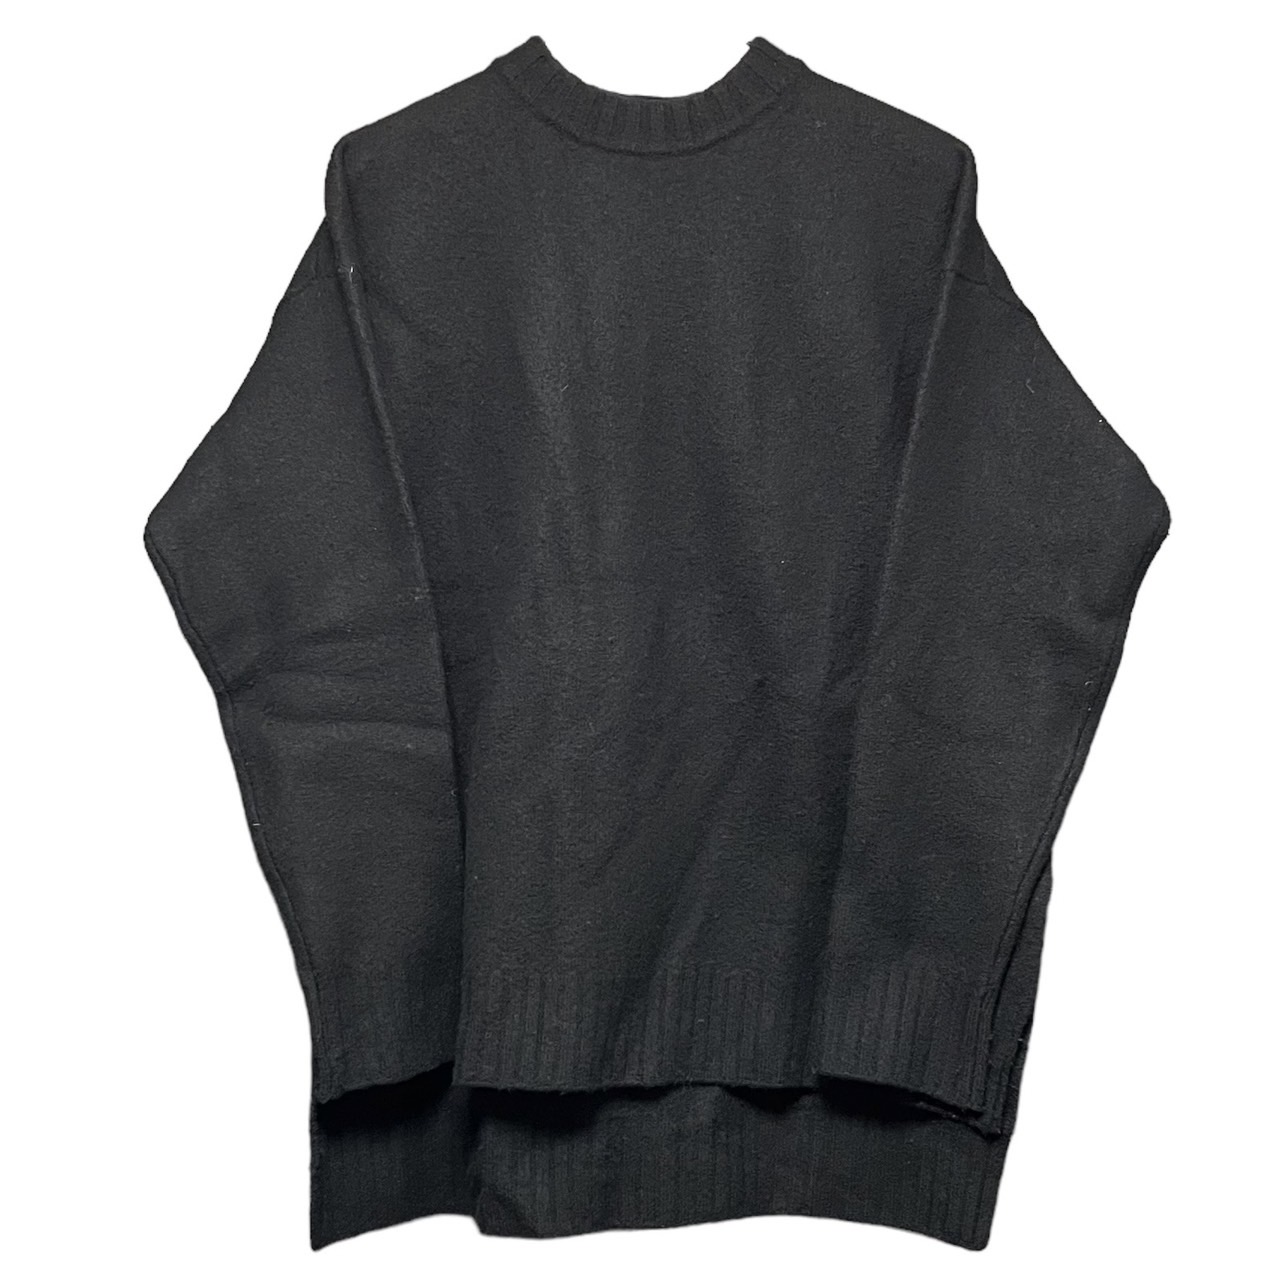 JIL SANDER Oversized knit sweater 買取金額 16,000円